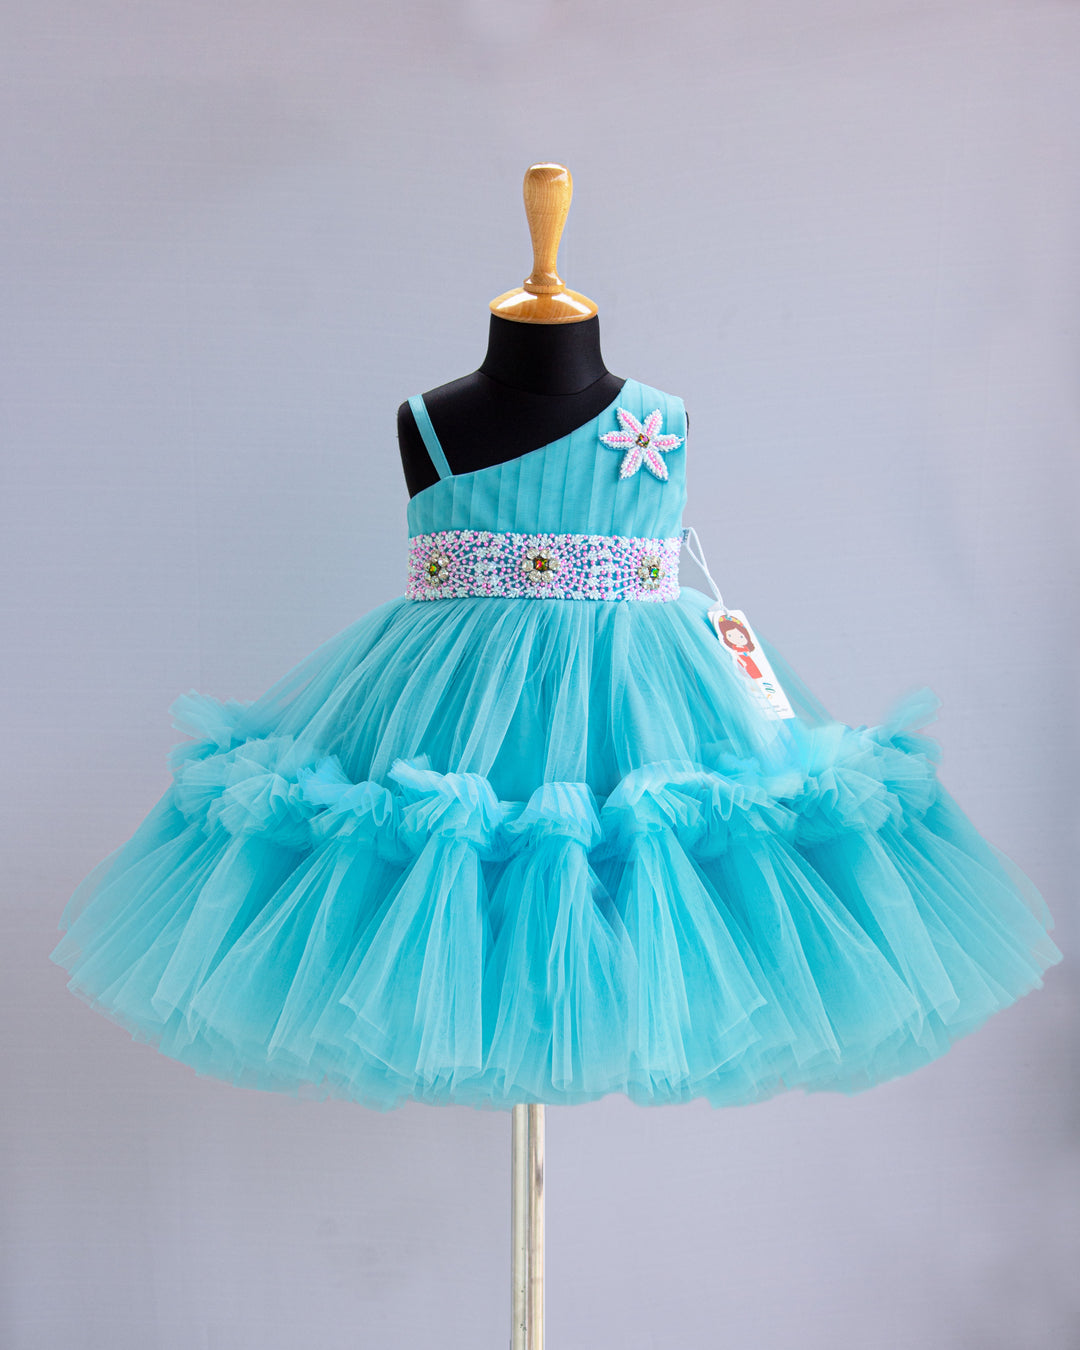 blue frocks for kids online dresses collection latest baby girls birthday dresses trending stanwells kids